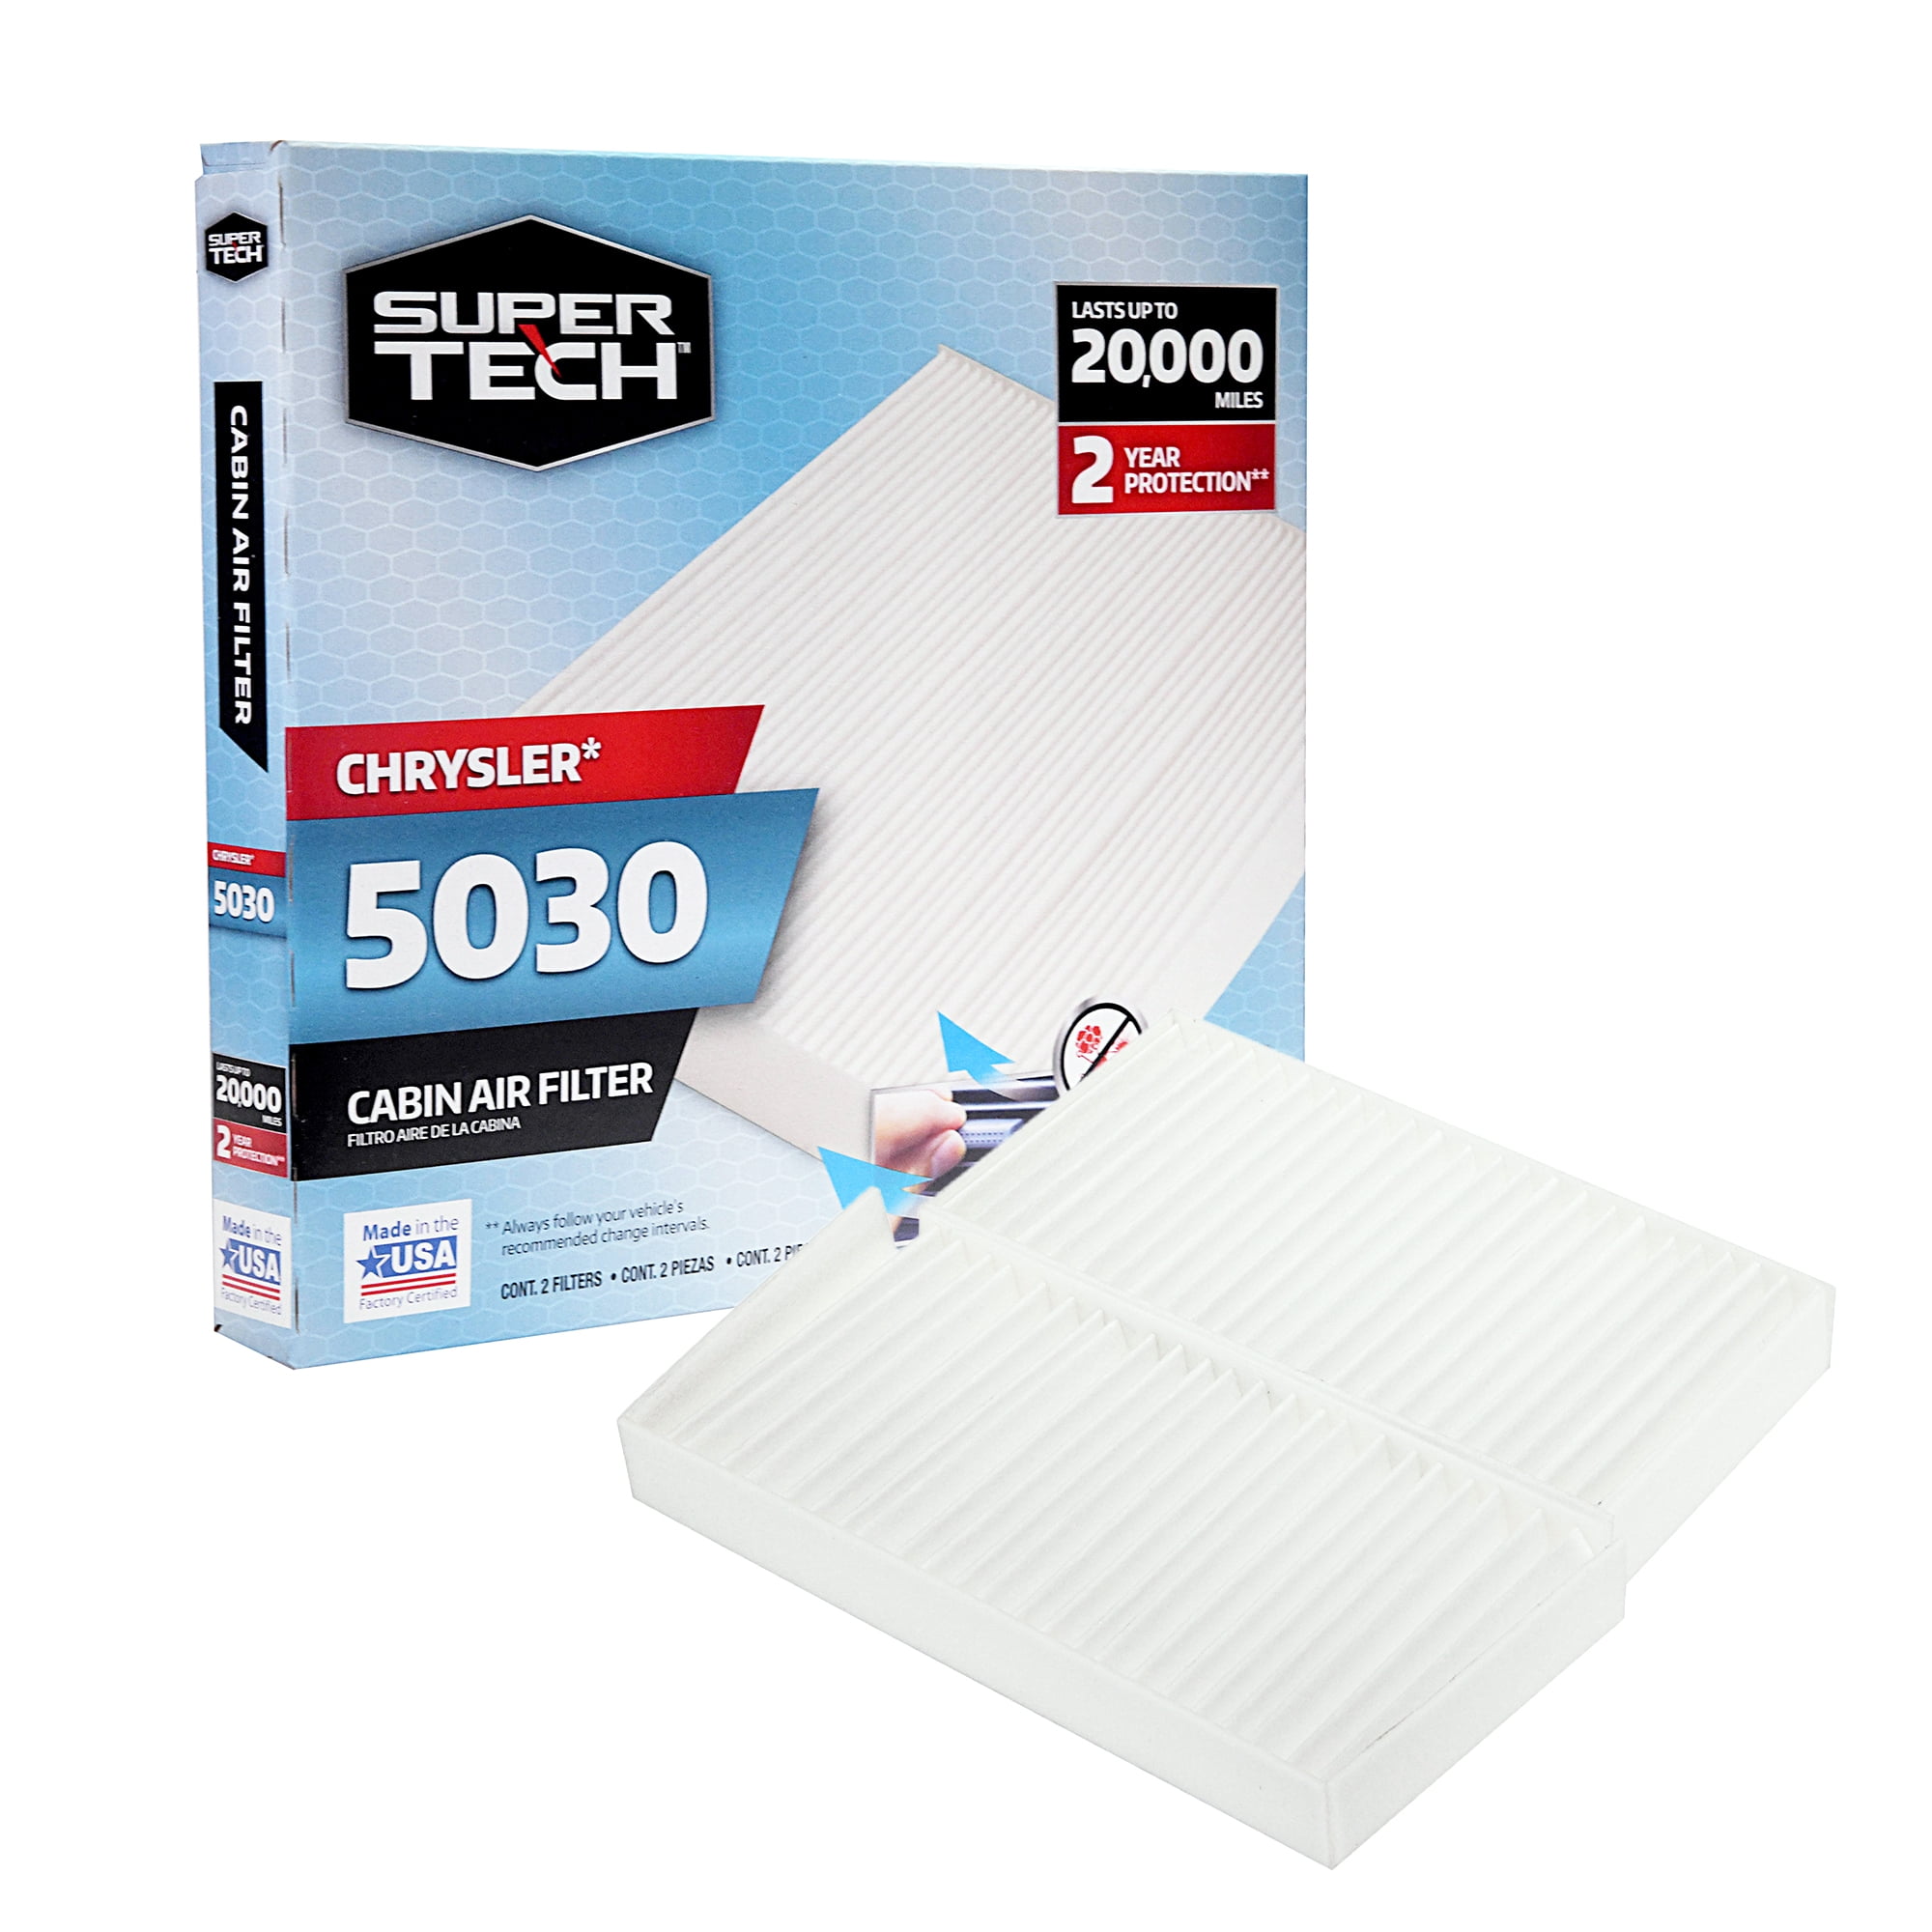 SuperTech Cabin Air Filter 5030, Replacement Air/Dust Filter for Chrysler -  